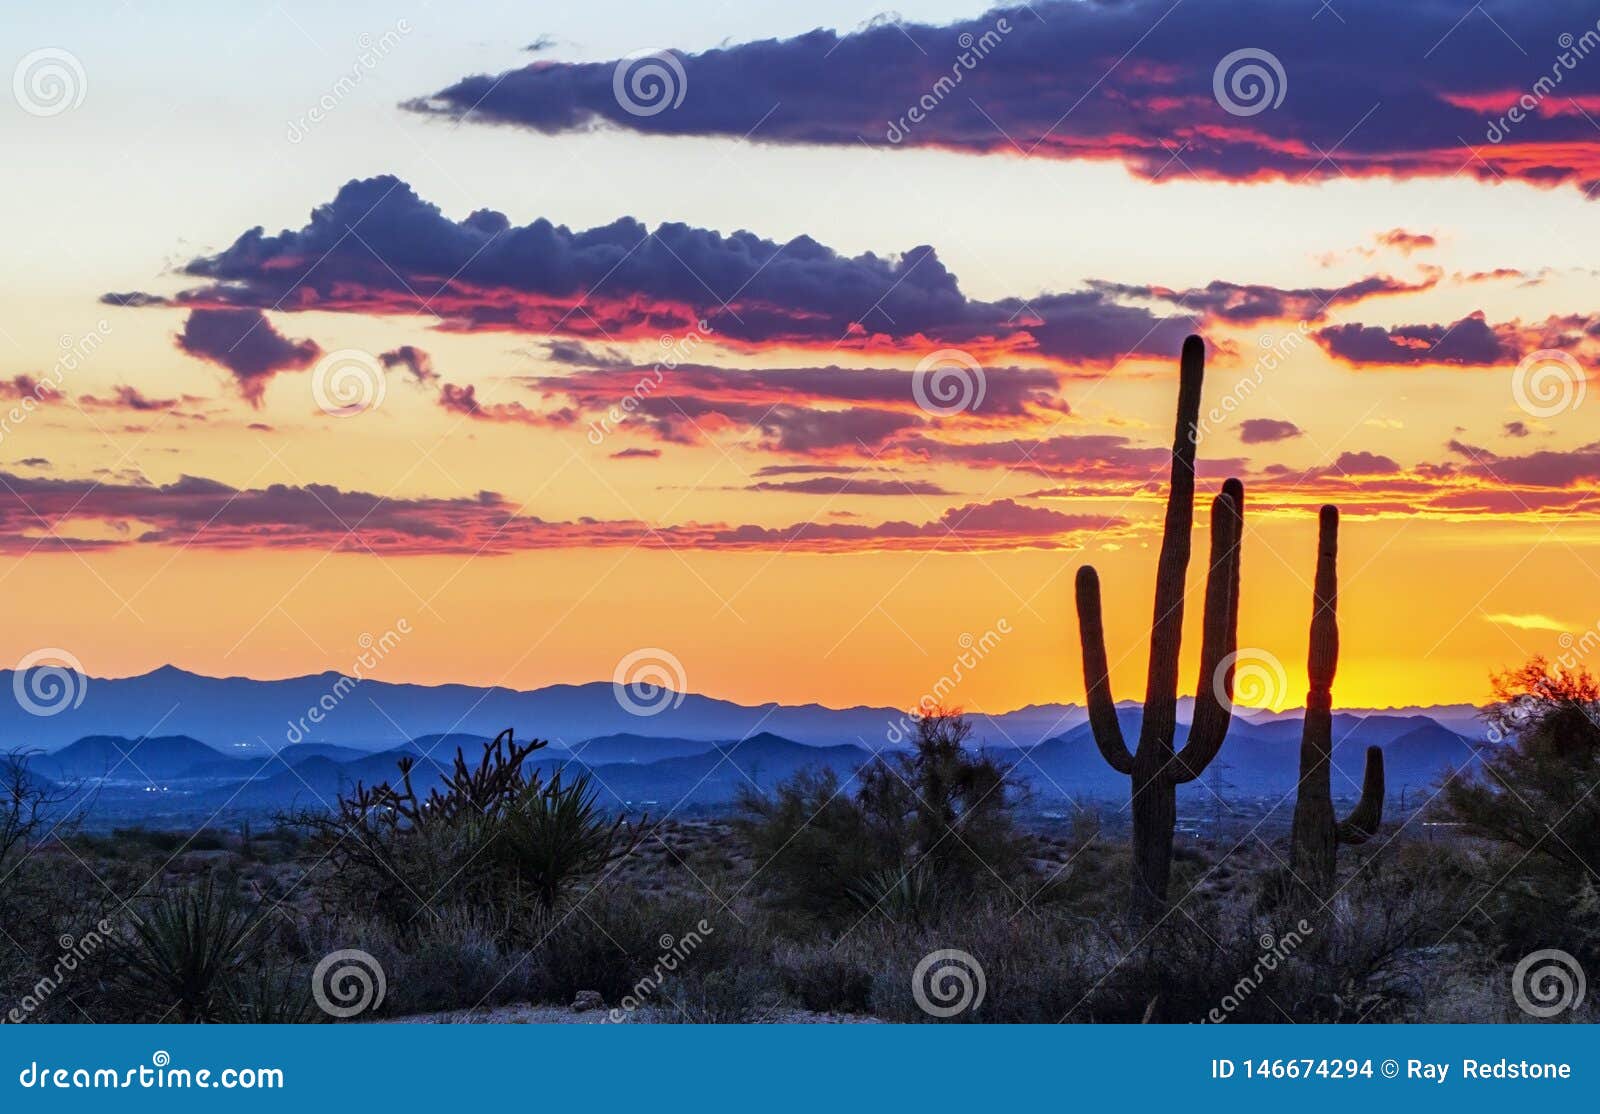 Arizona Desert Sunset Near North Scottsdale Arizona Stock Photo - Image ...